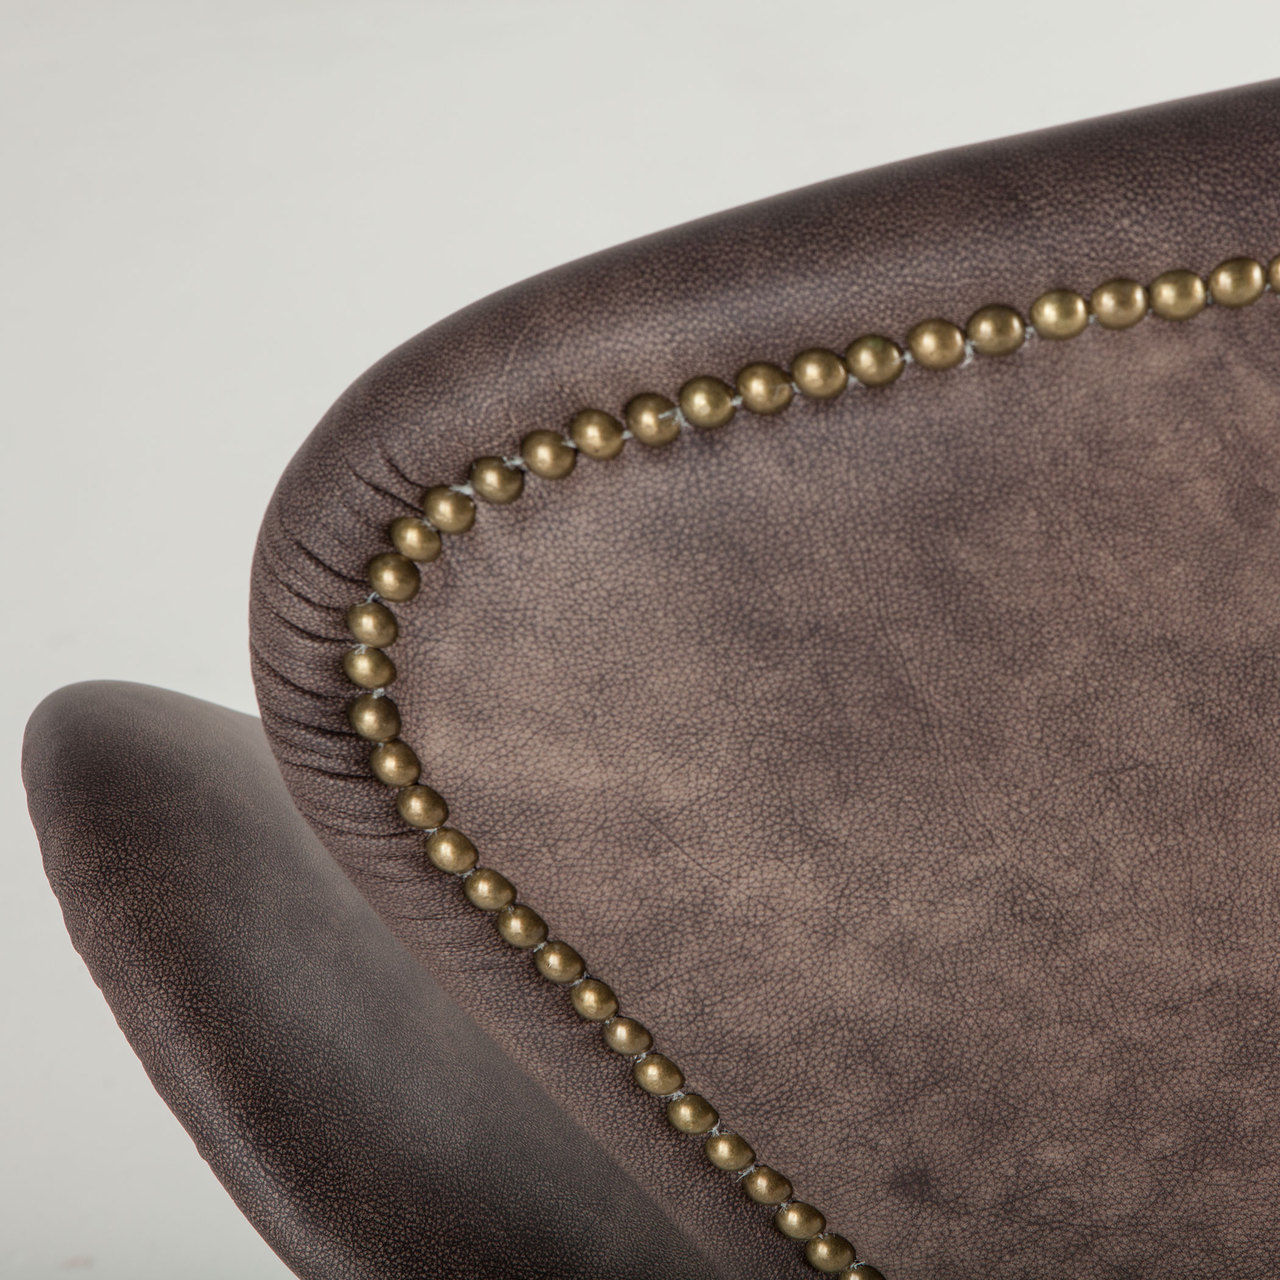 Vintage Leather & Chrome Barstool Swivel Set of 2 - Furniture on Main